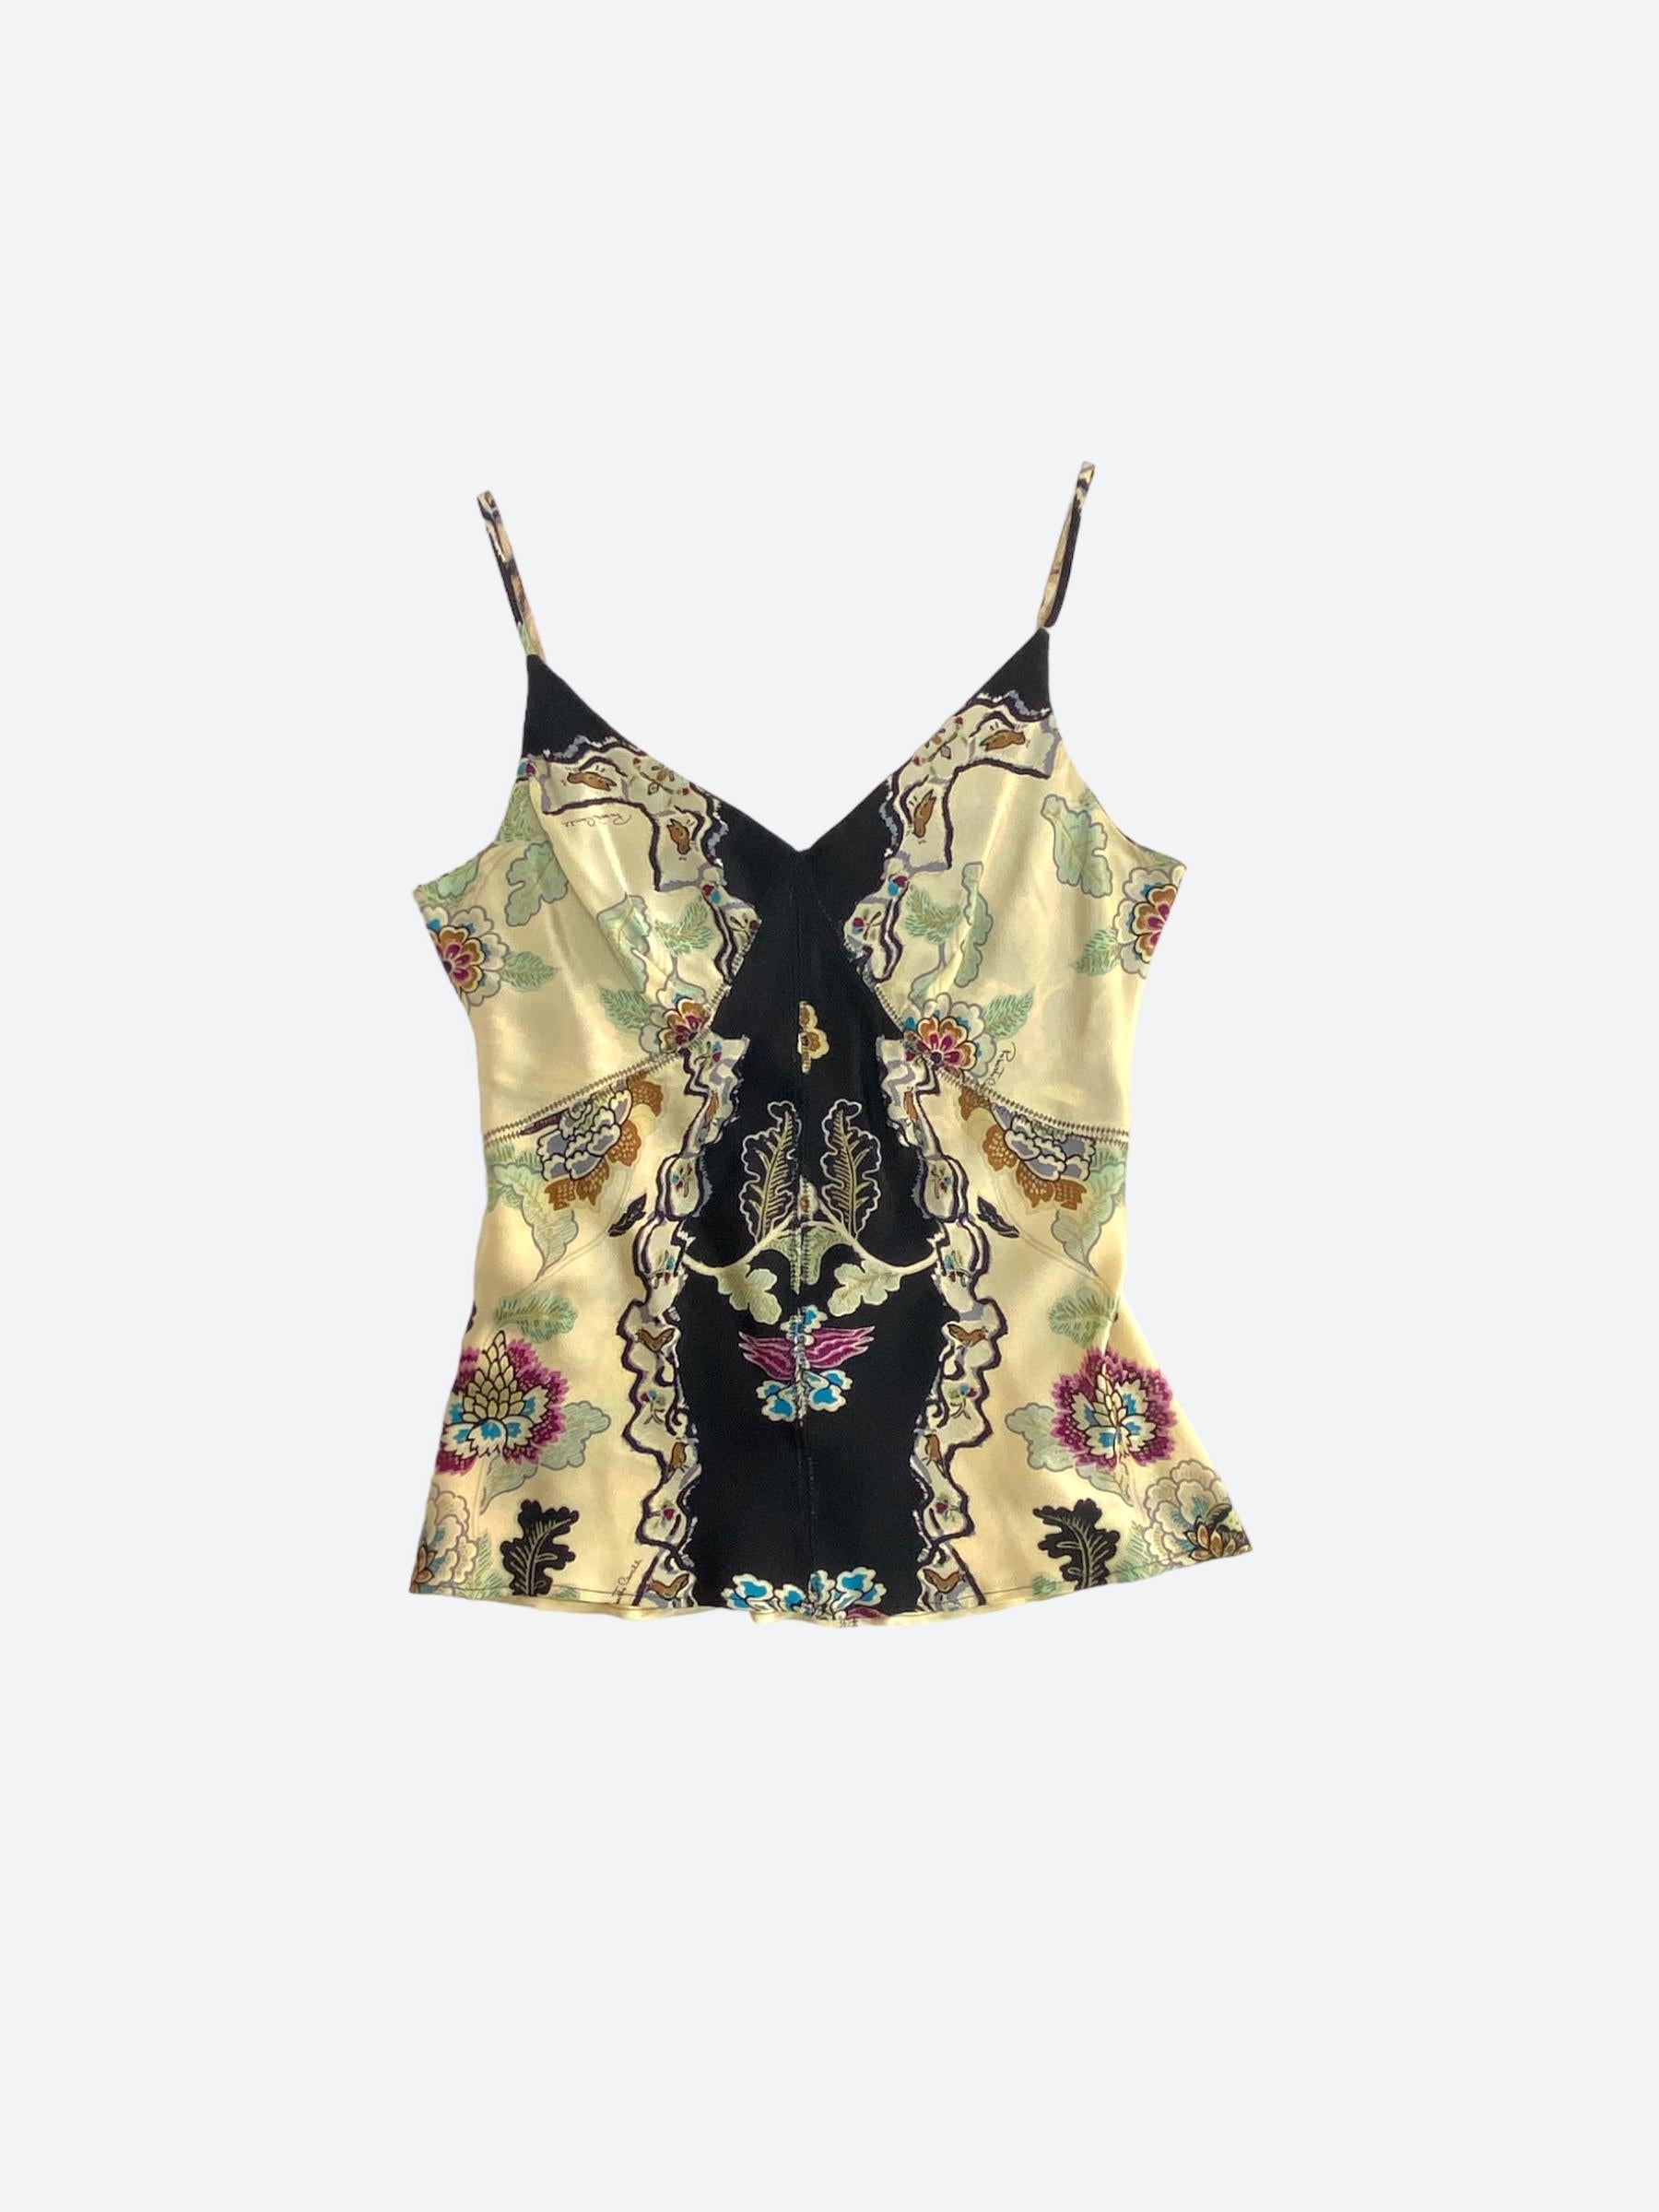 Women's 2003 Roberto Cavalli 3 piece gold silk set (top, shirt and maxi skirt) For Sale